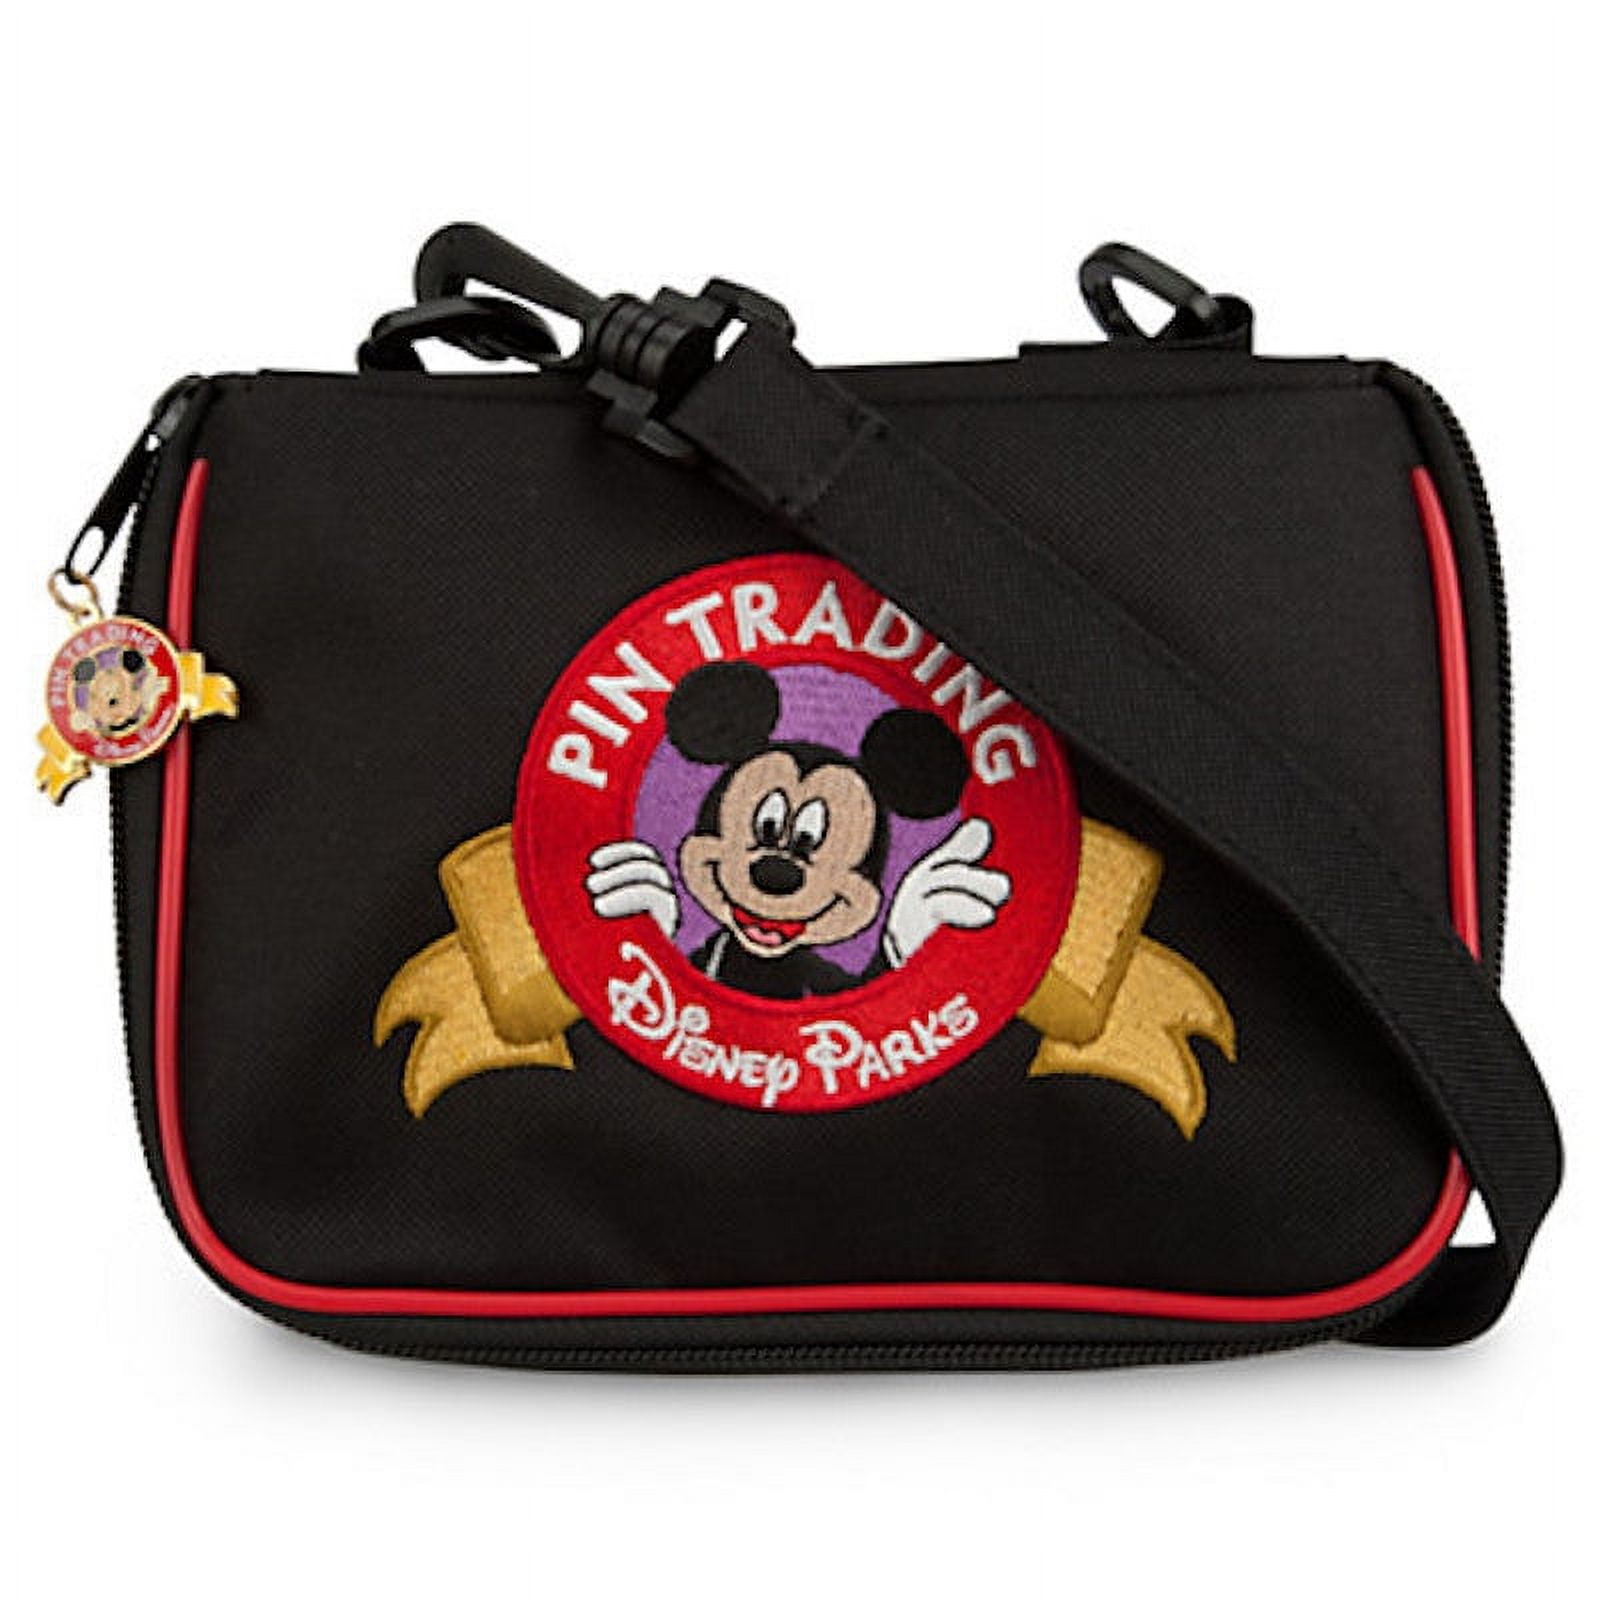 New Disney Pin Trading Bags & Belts Arrive at Walt Disney World